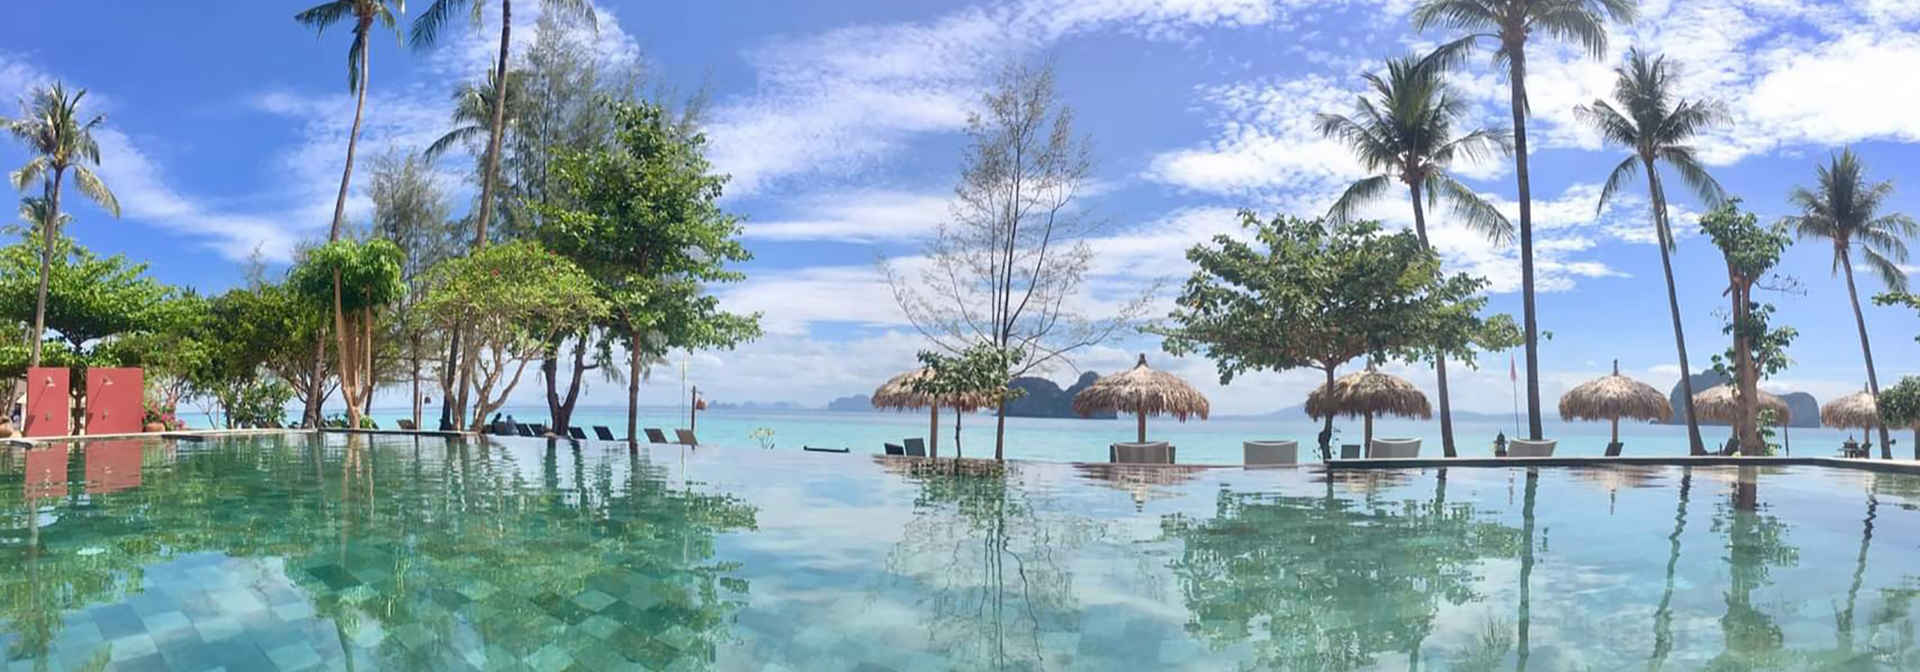 thailand - thanya_beach_resort__pool_02